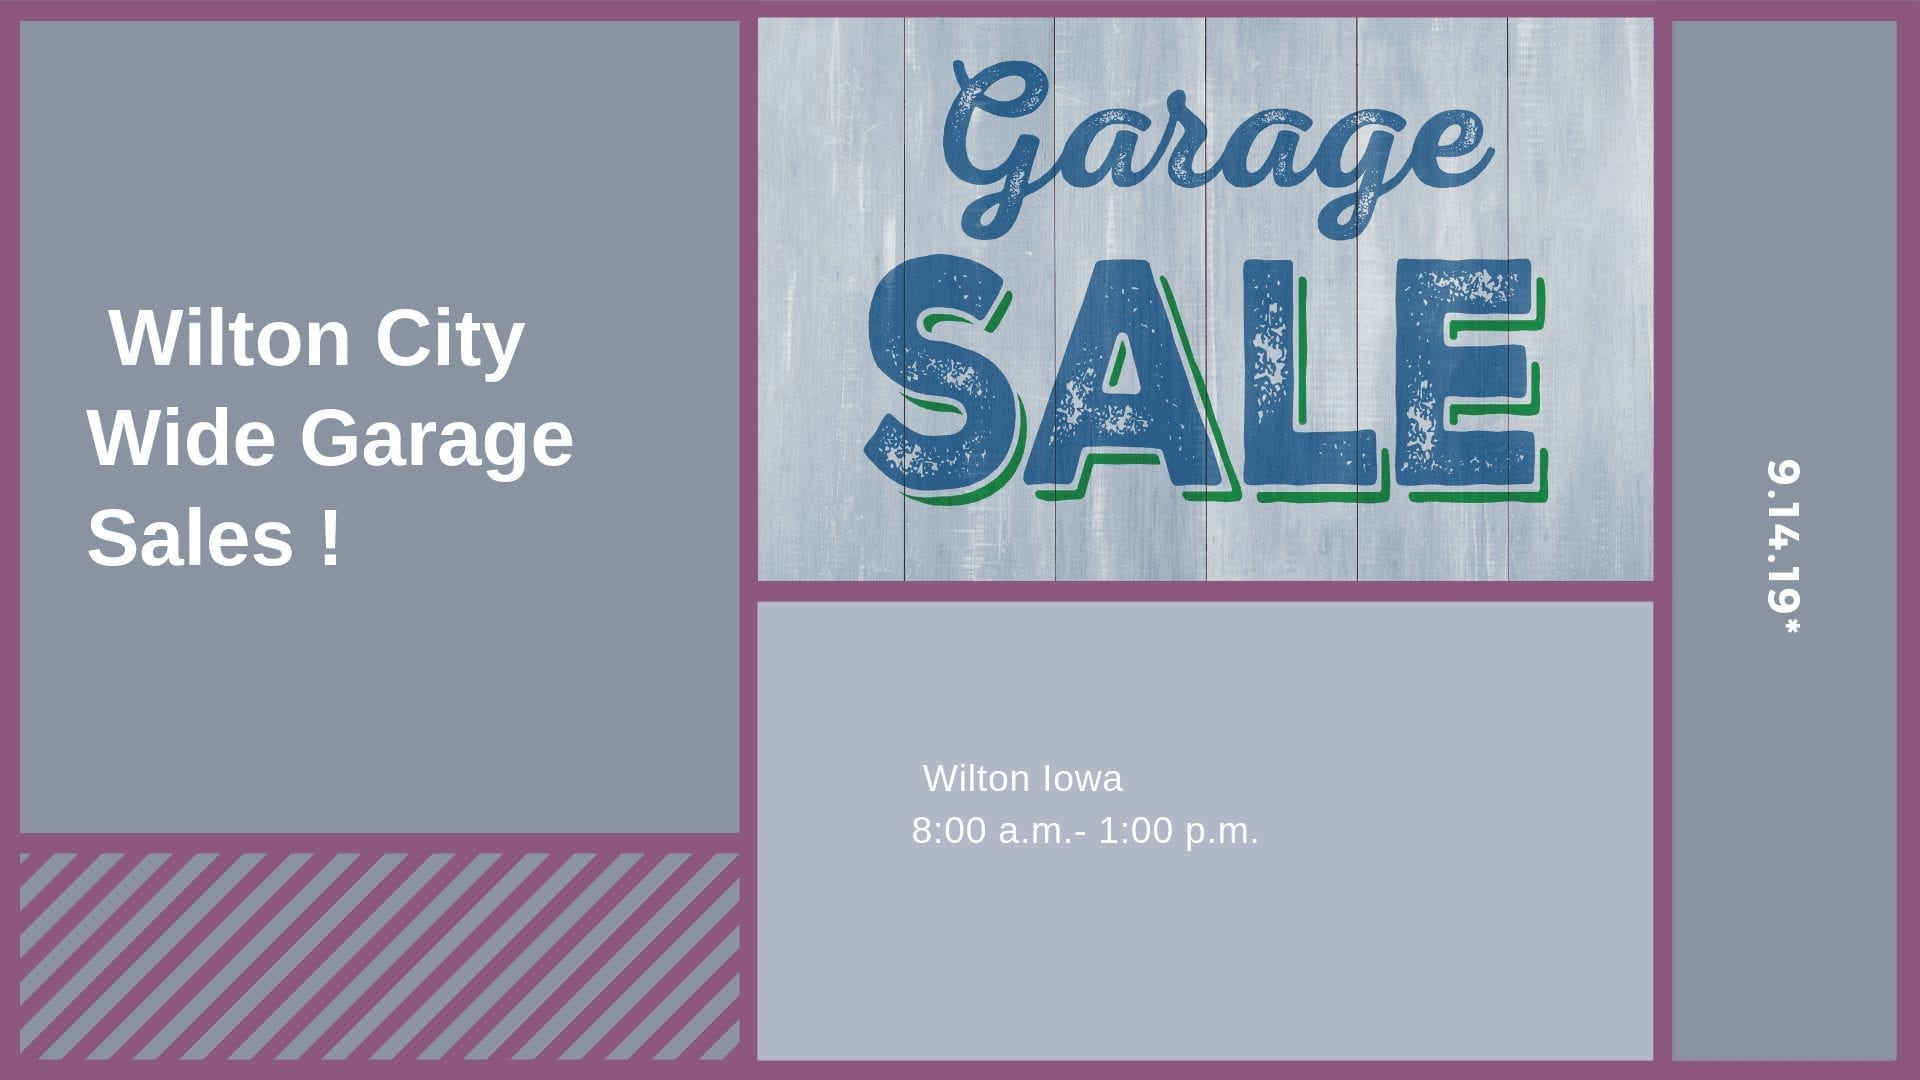 Wilton City Wide Garage Sales !